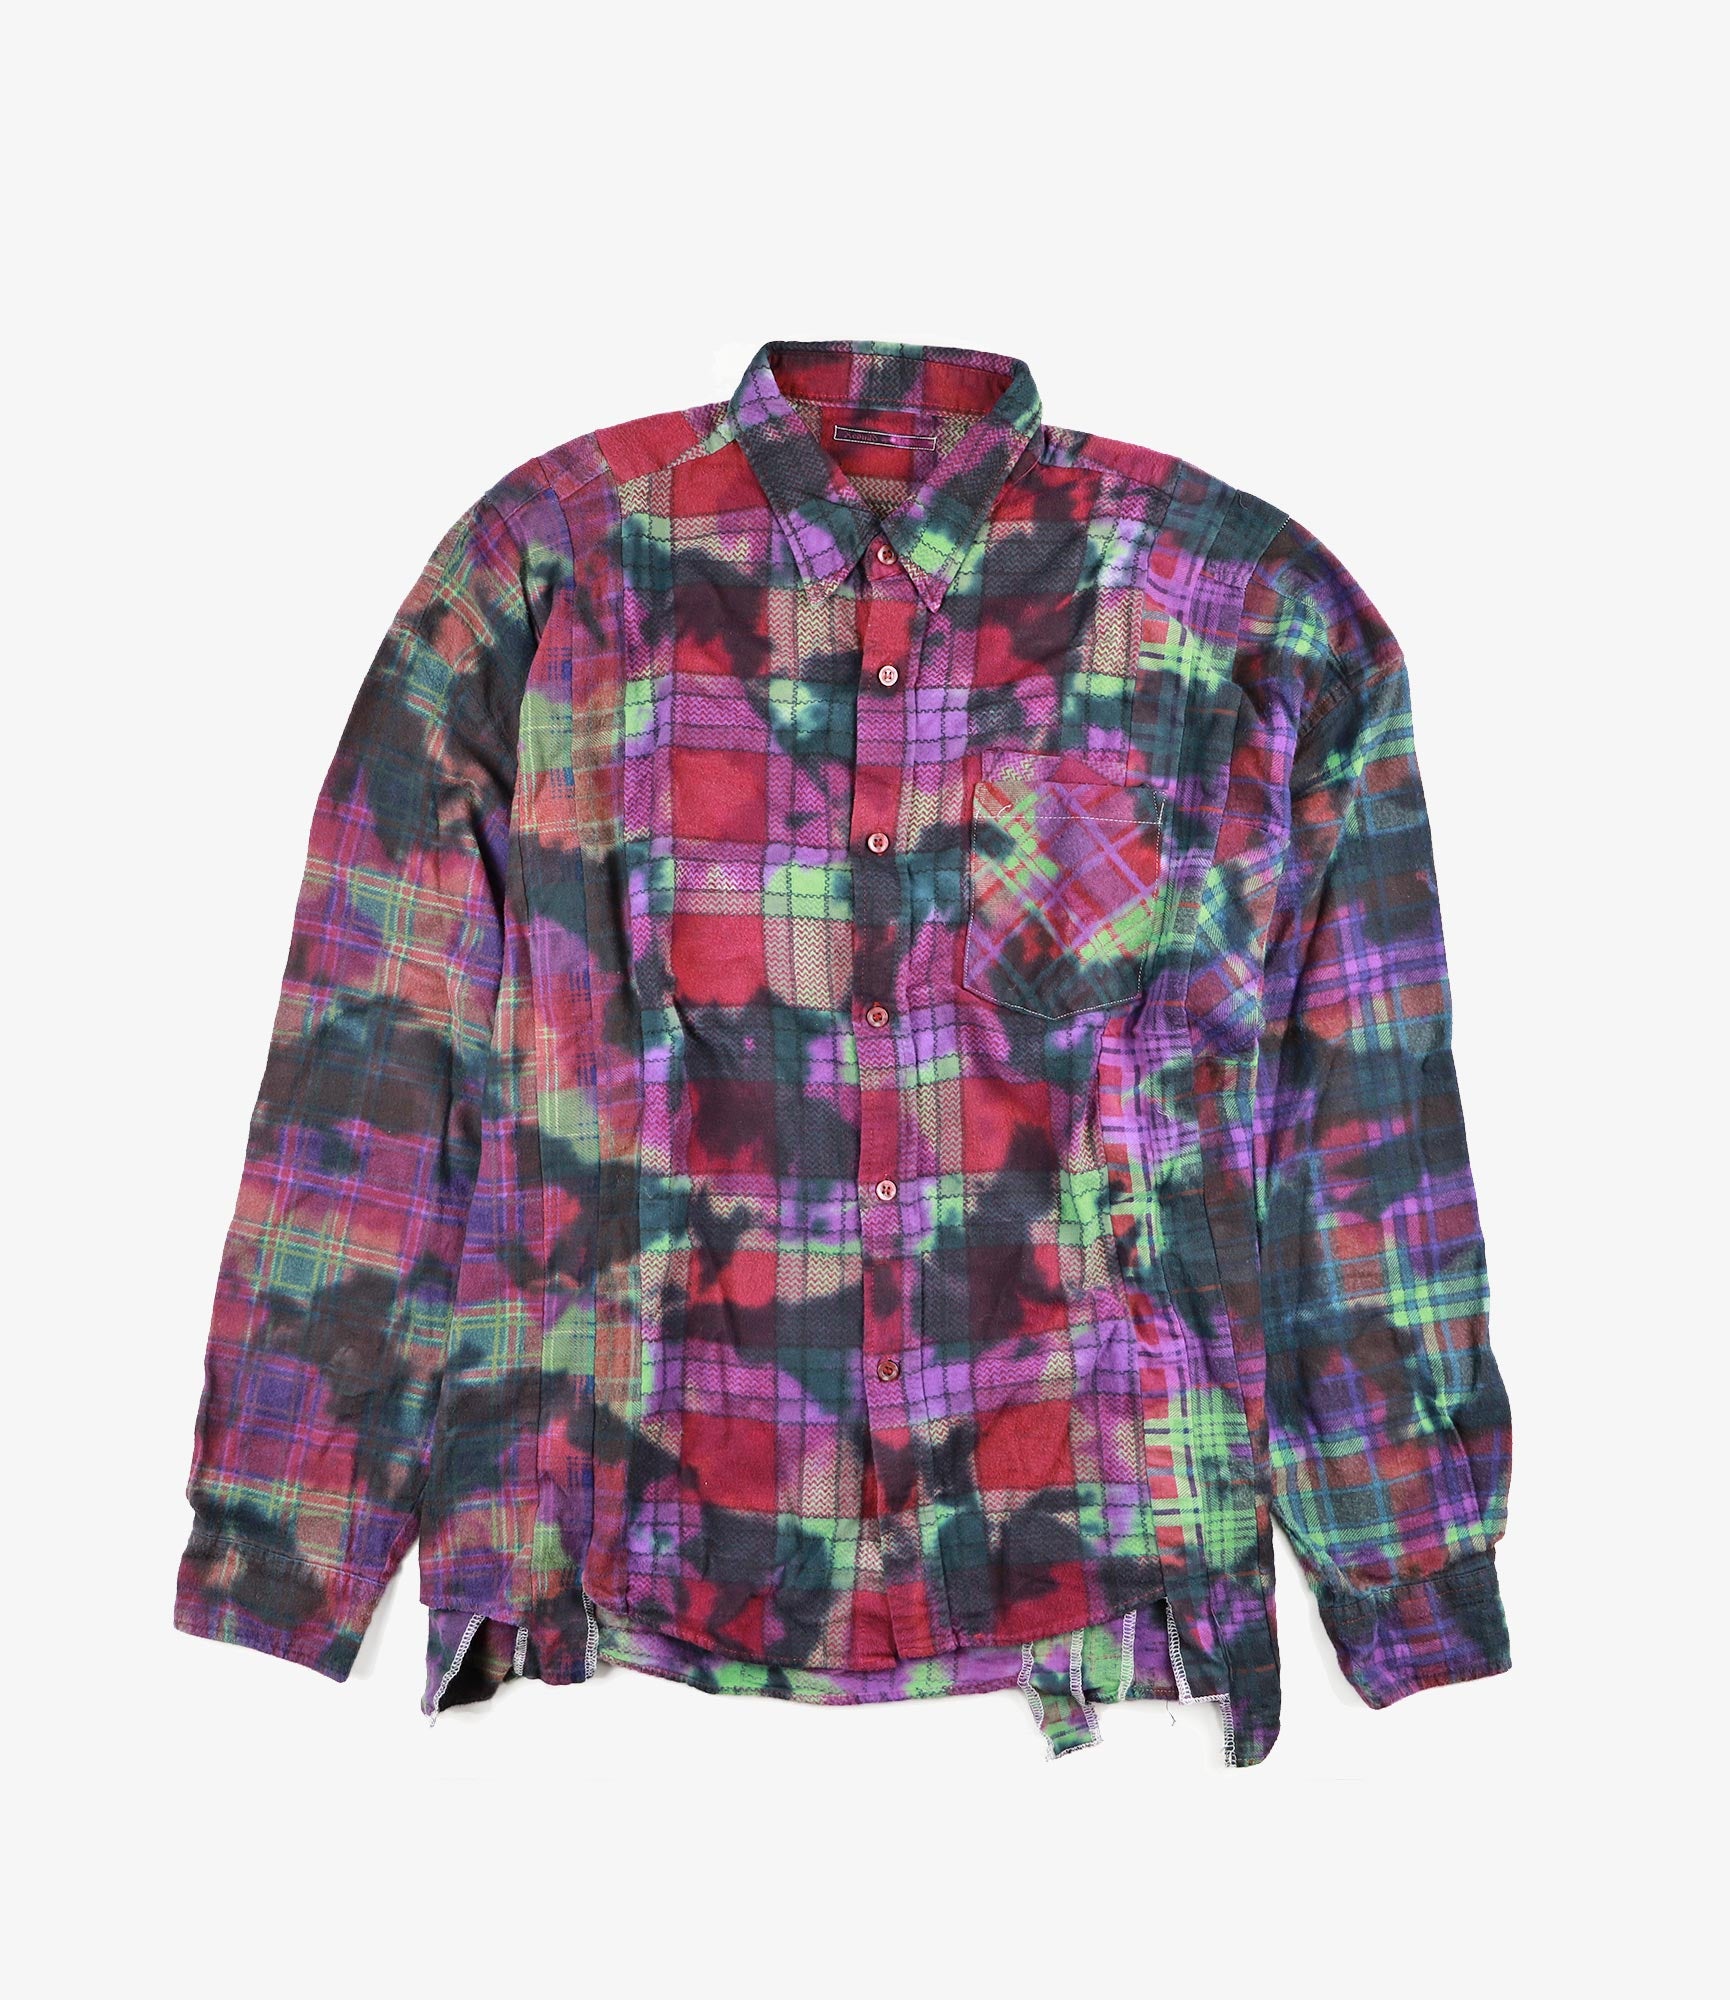 Rebuild by Needles Flannel Shirt - 7 Cuts Wide Shirt / Uneven Dye